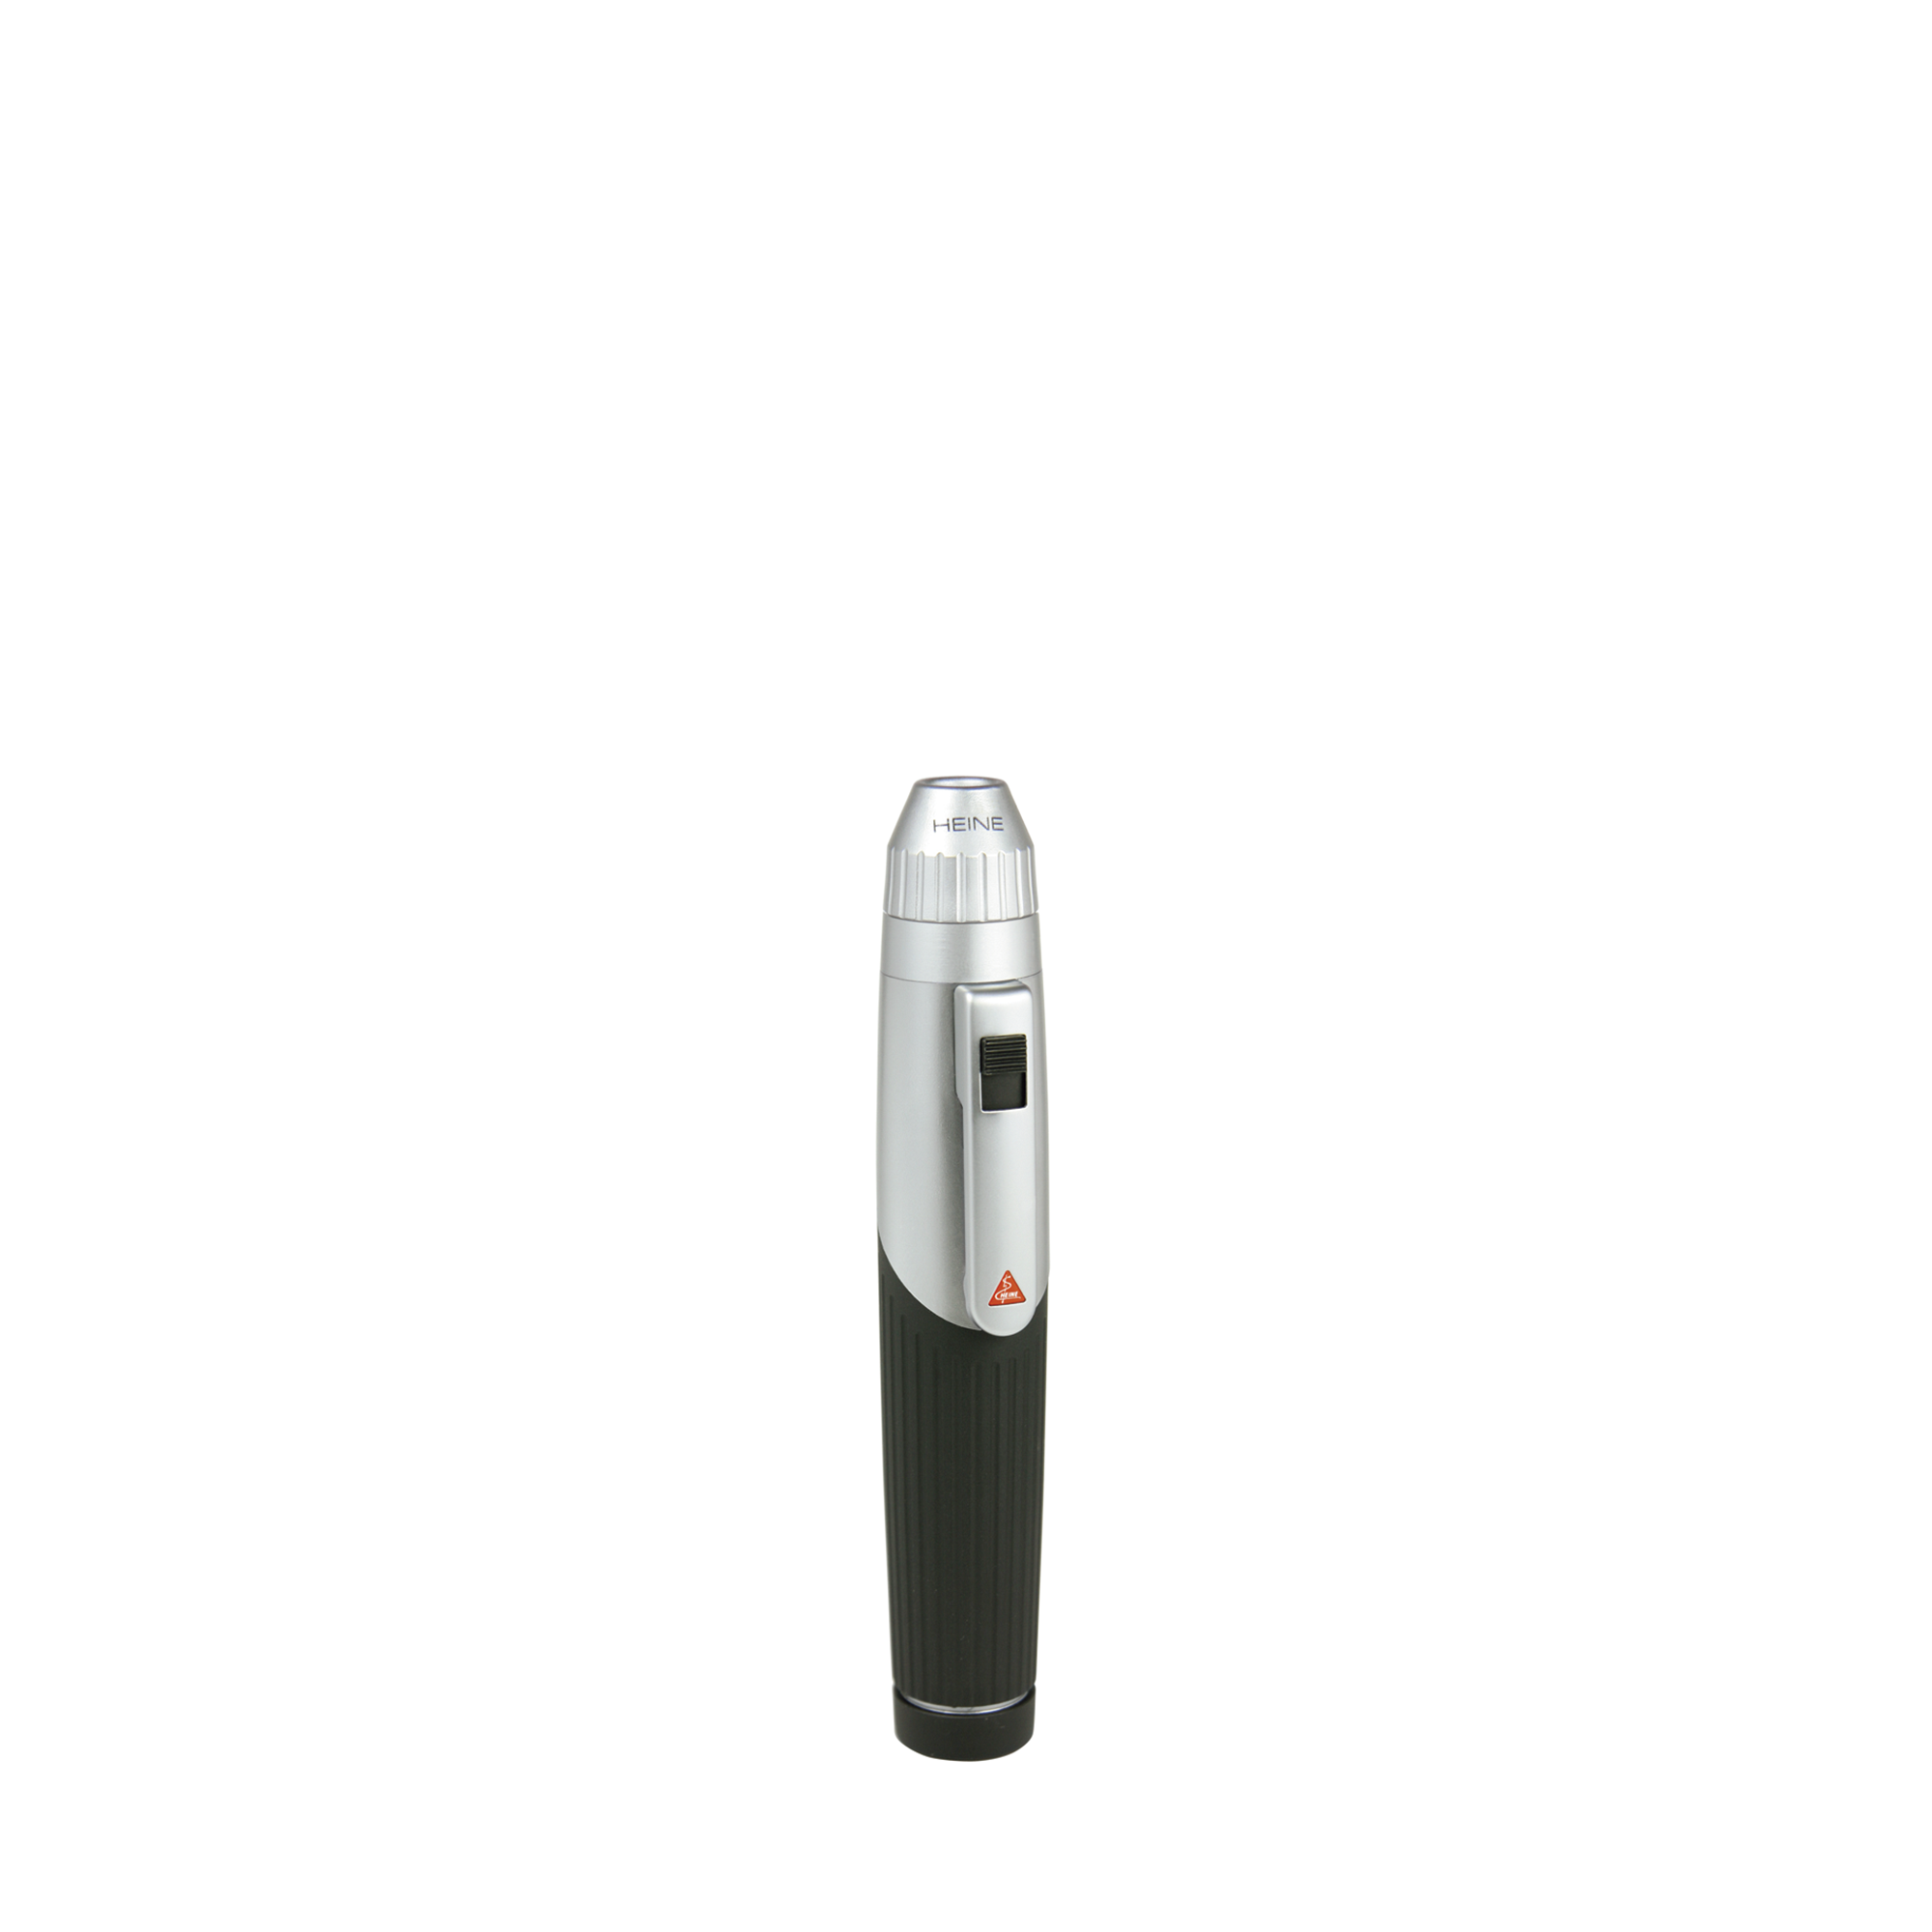 HEINE mini 3000 Clip Lamp with mini 3000 battery handle